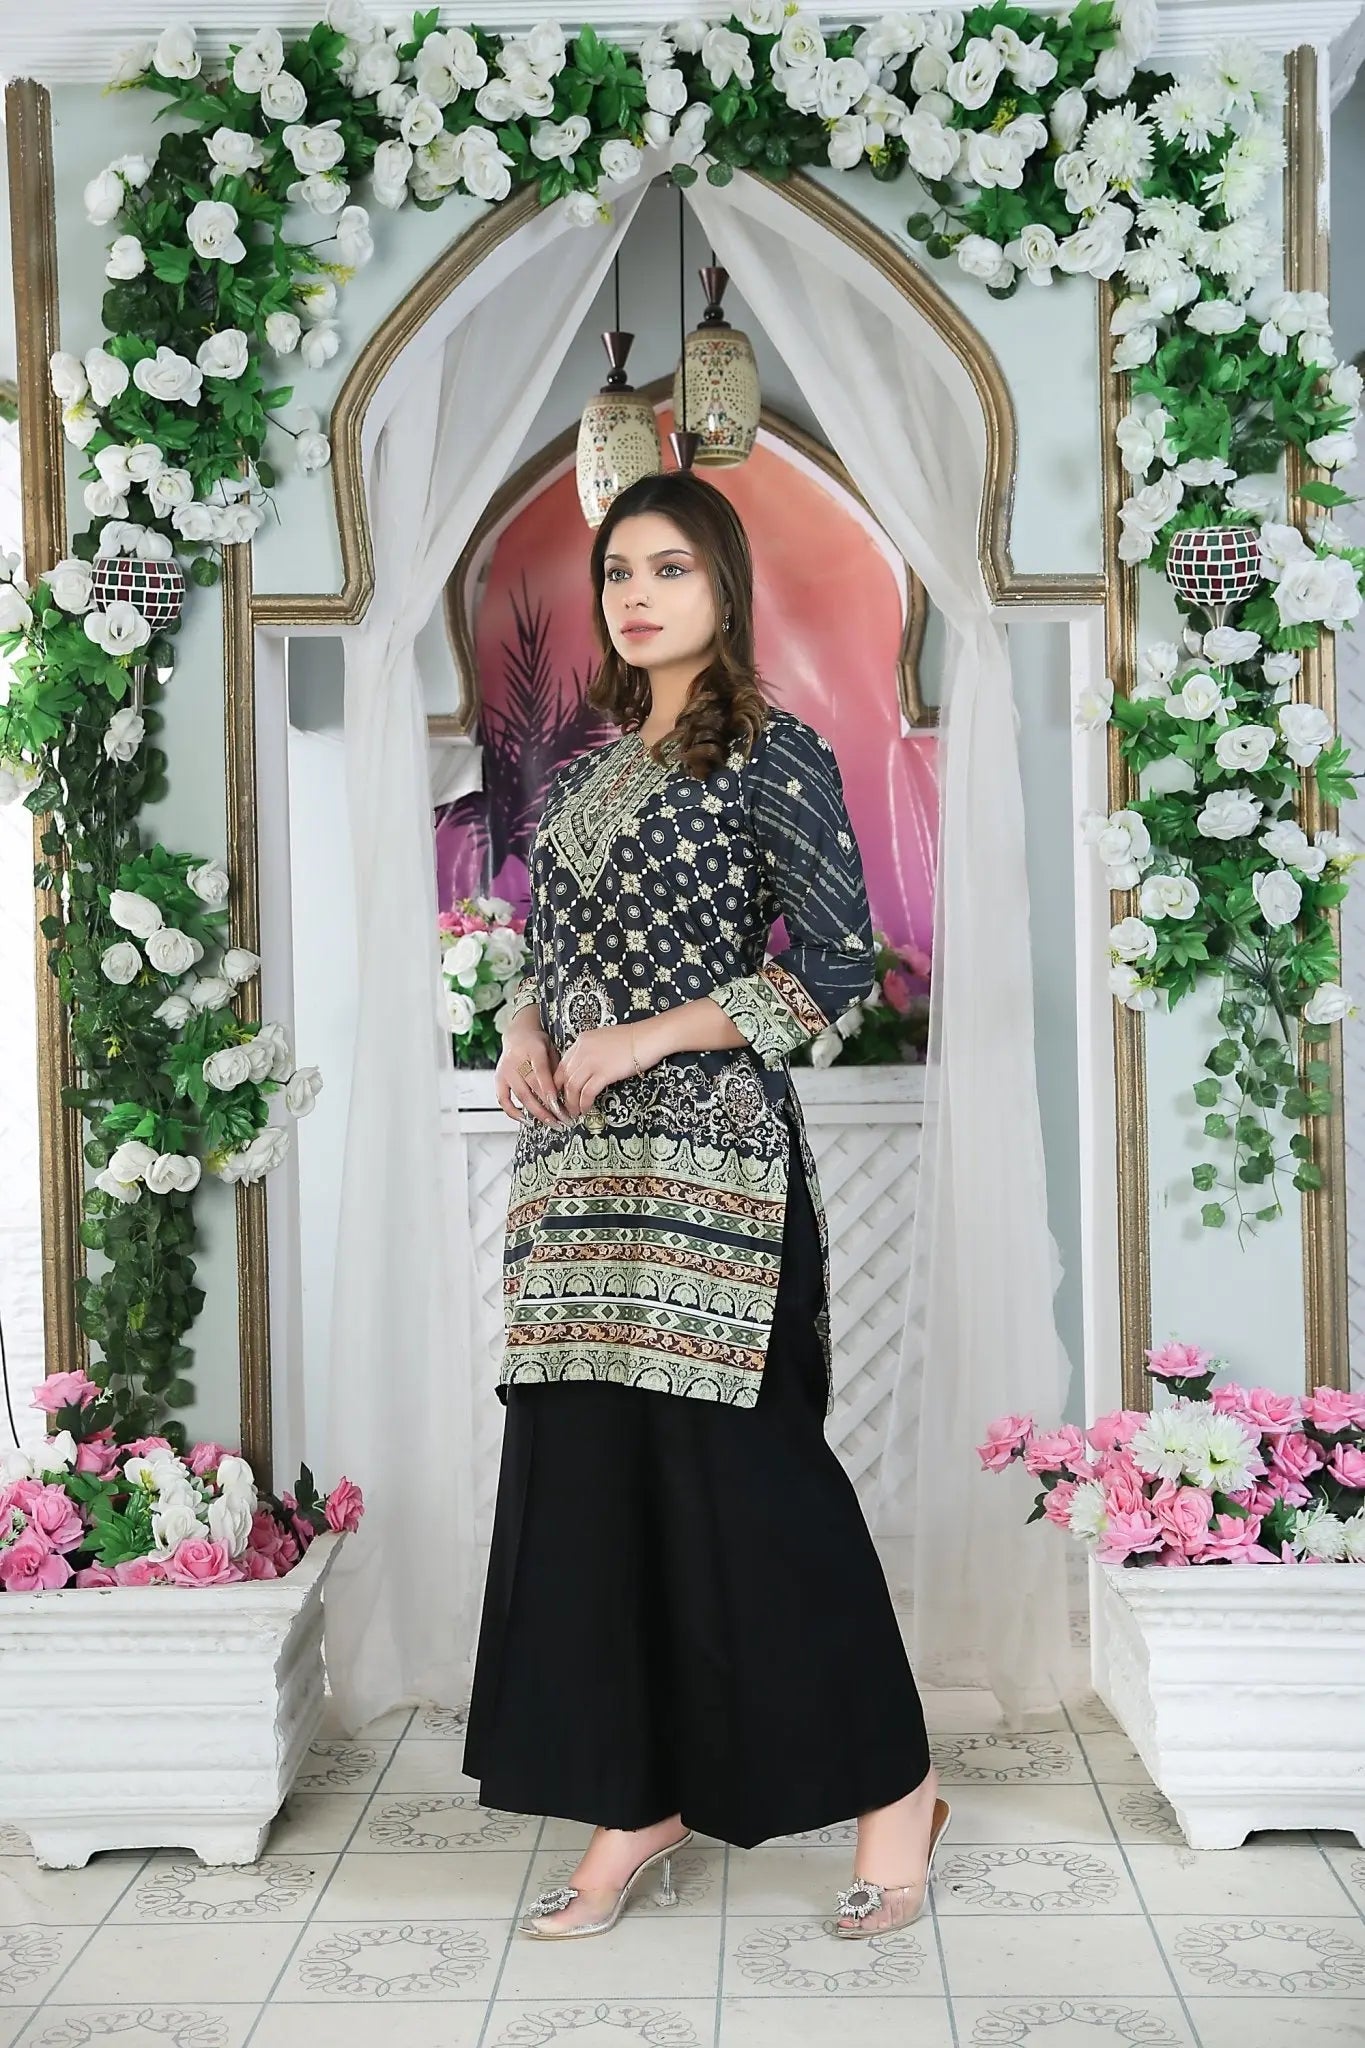 IshDeena Stylish Cotton Lawn Kurtis for Women - Indian Pakistani Long Tops in B&W Prints for Casual Summer Wear, M - 3XL - IshDeena